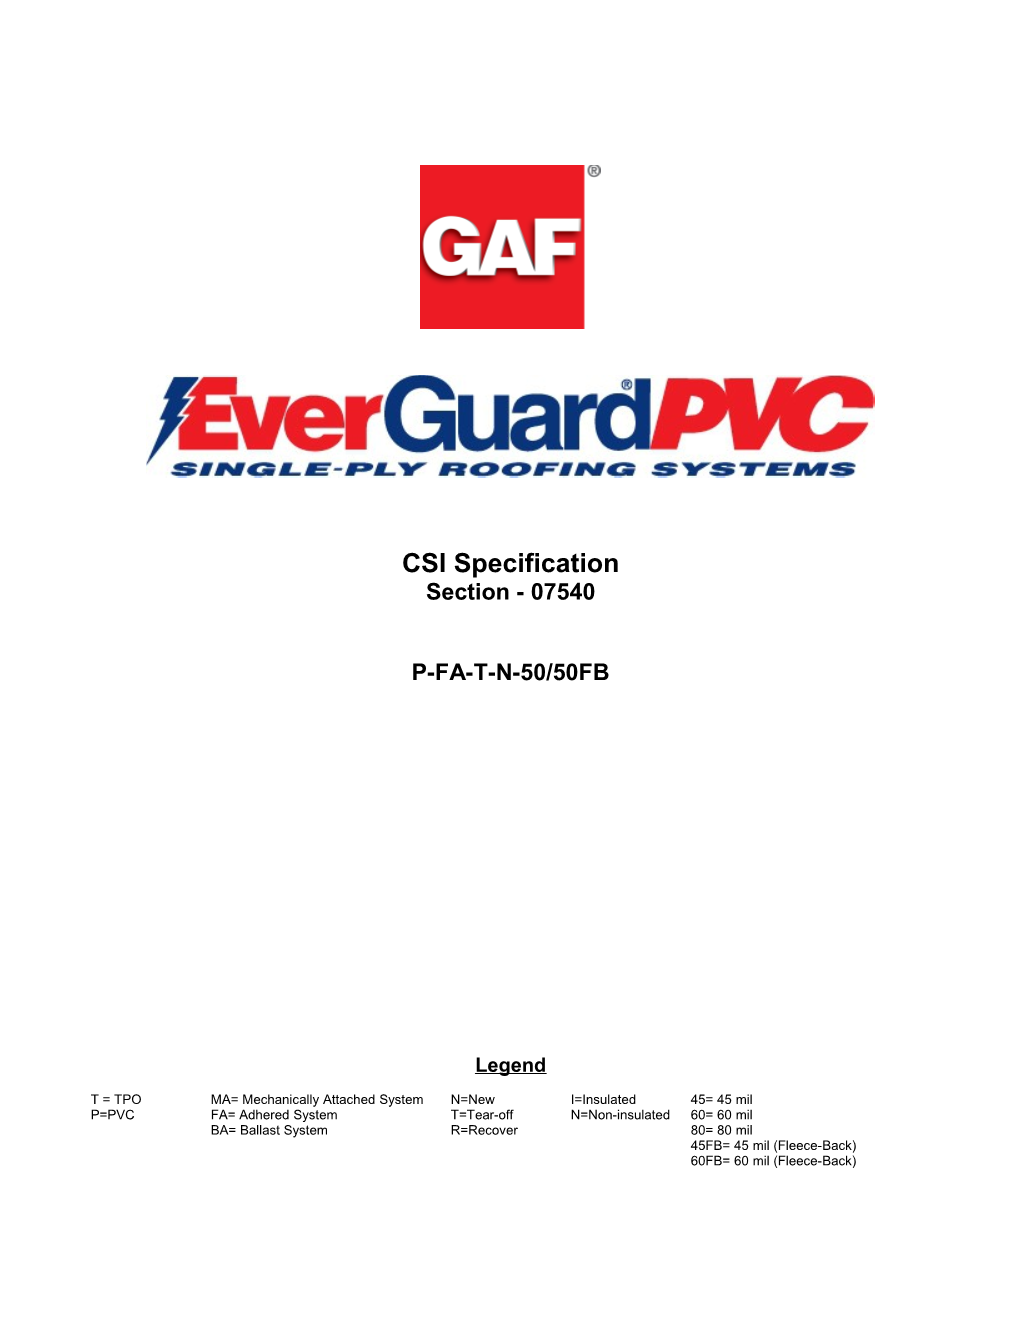 Gafeverguard Pvc Specification